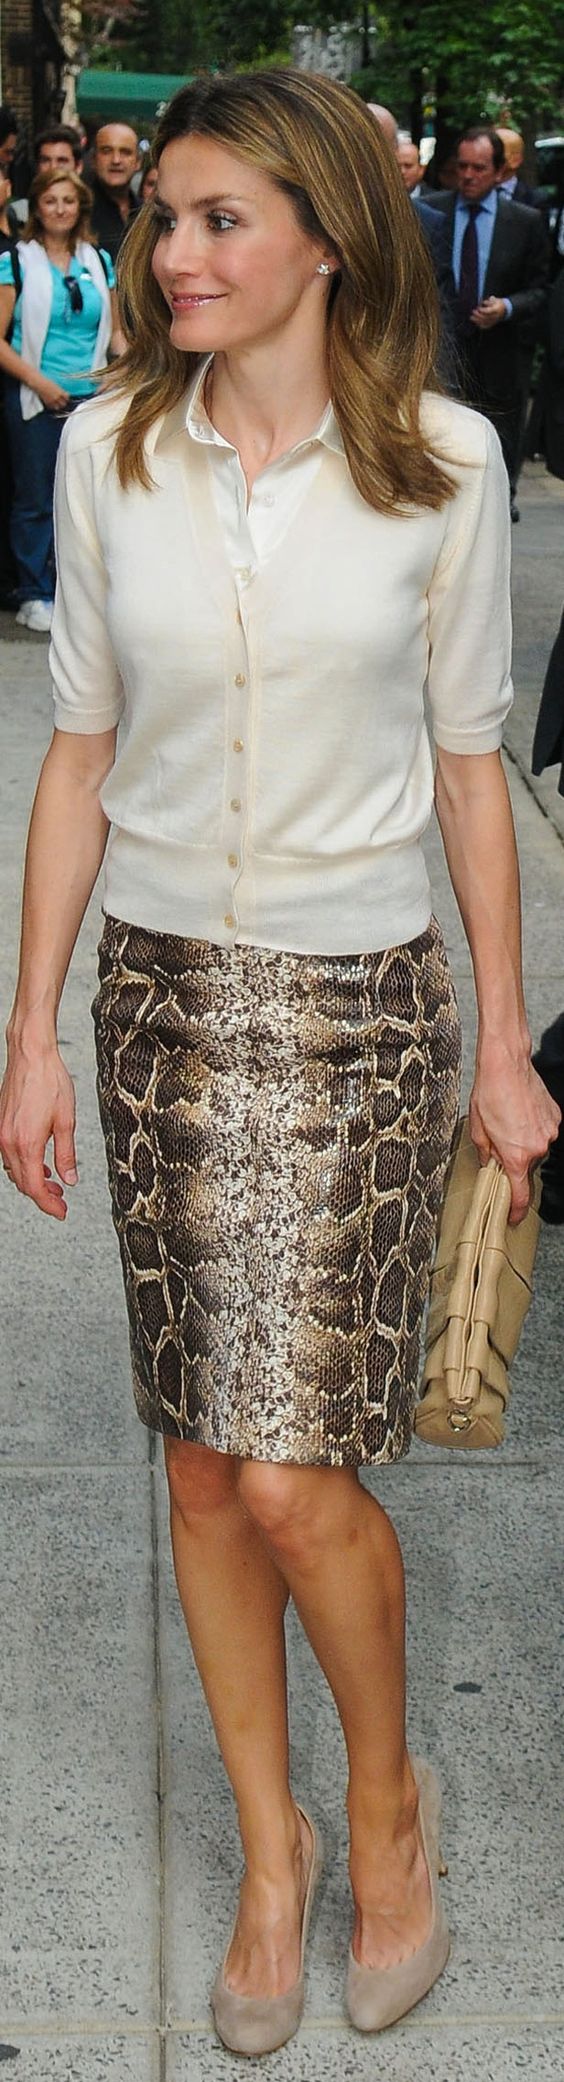 Snakeskin skirt worn by Princess Letizia